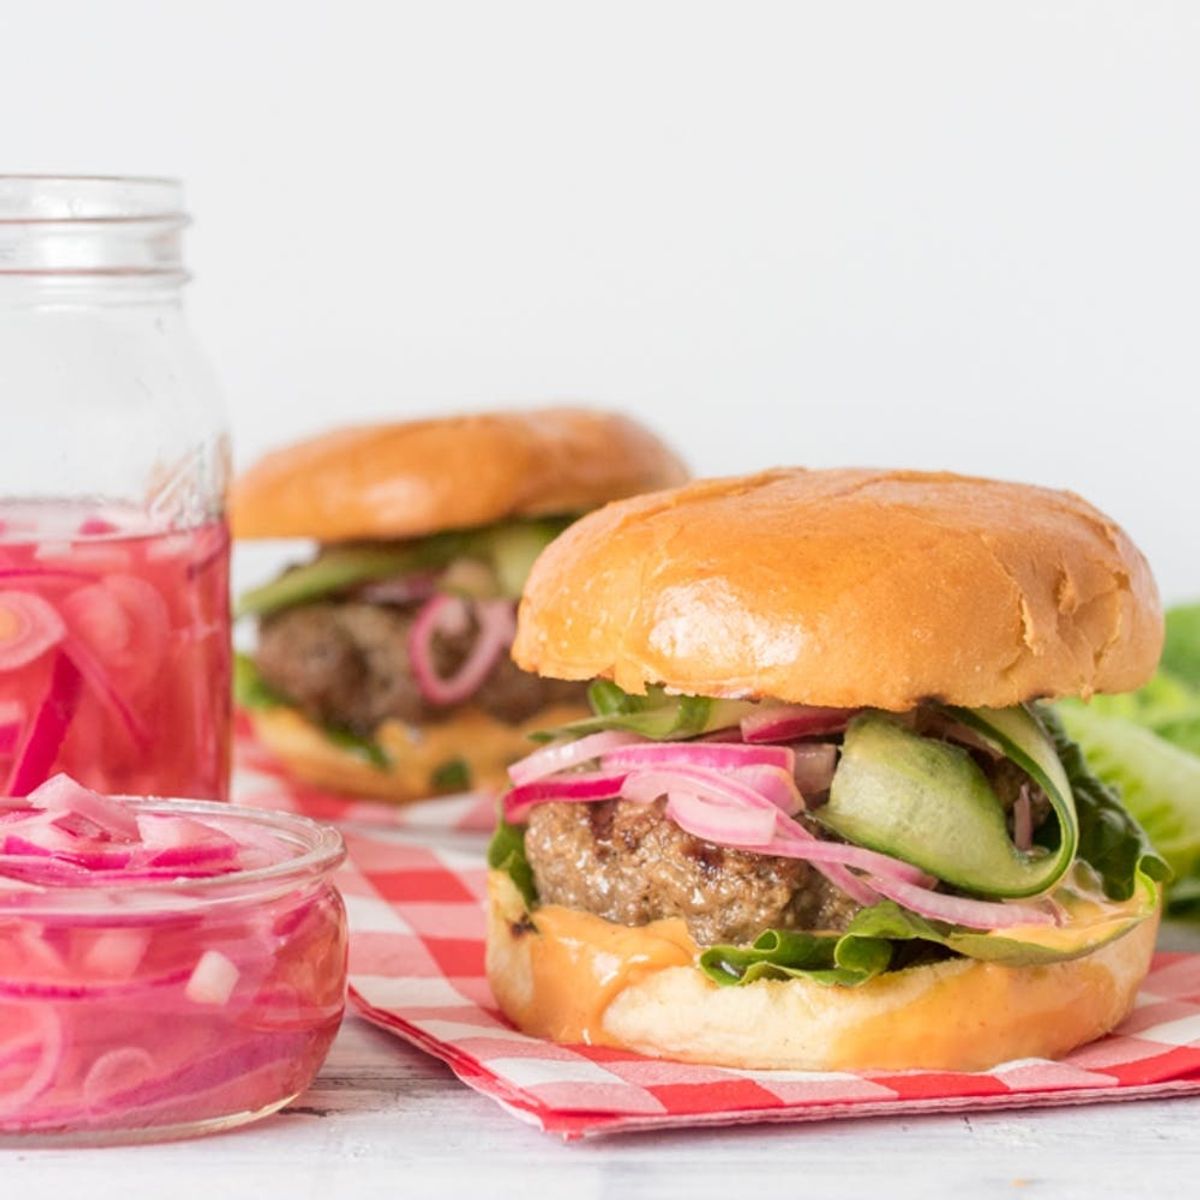 Homemade Pickled Veg: the Latest Trend in Burger Toppings!